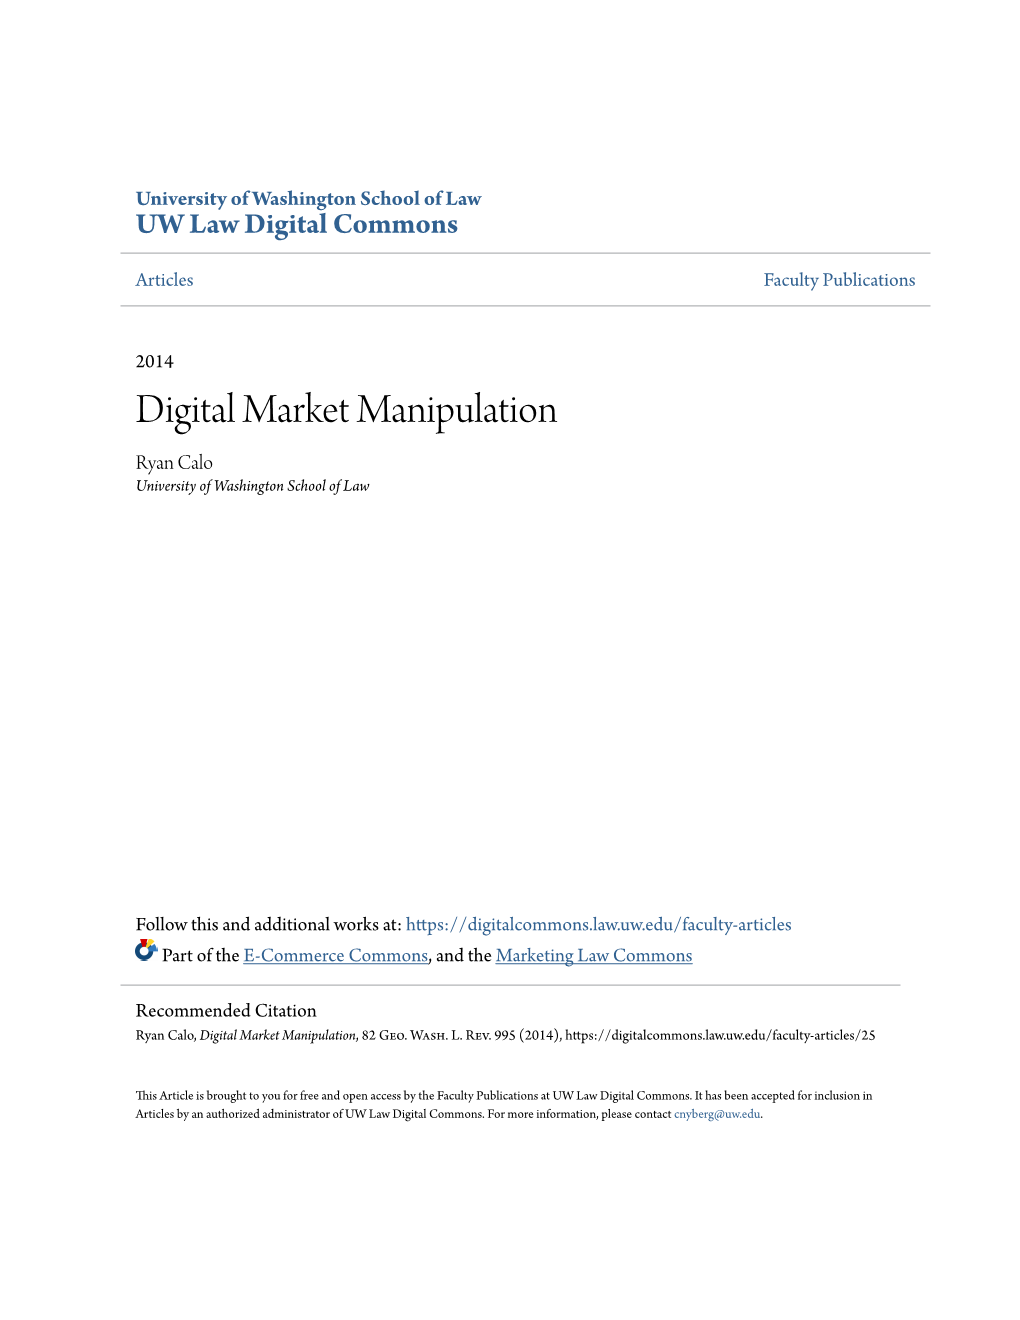 Digital Market Manipulation Ryan Calo University of Washington School of Law